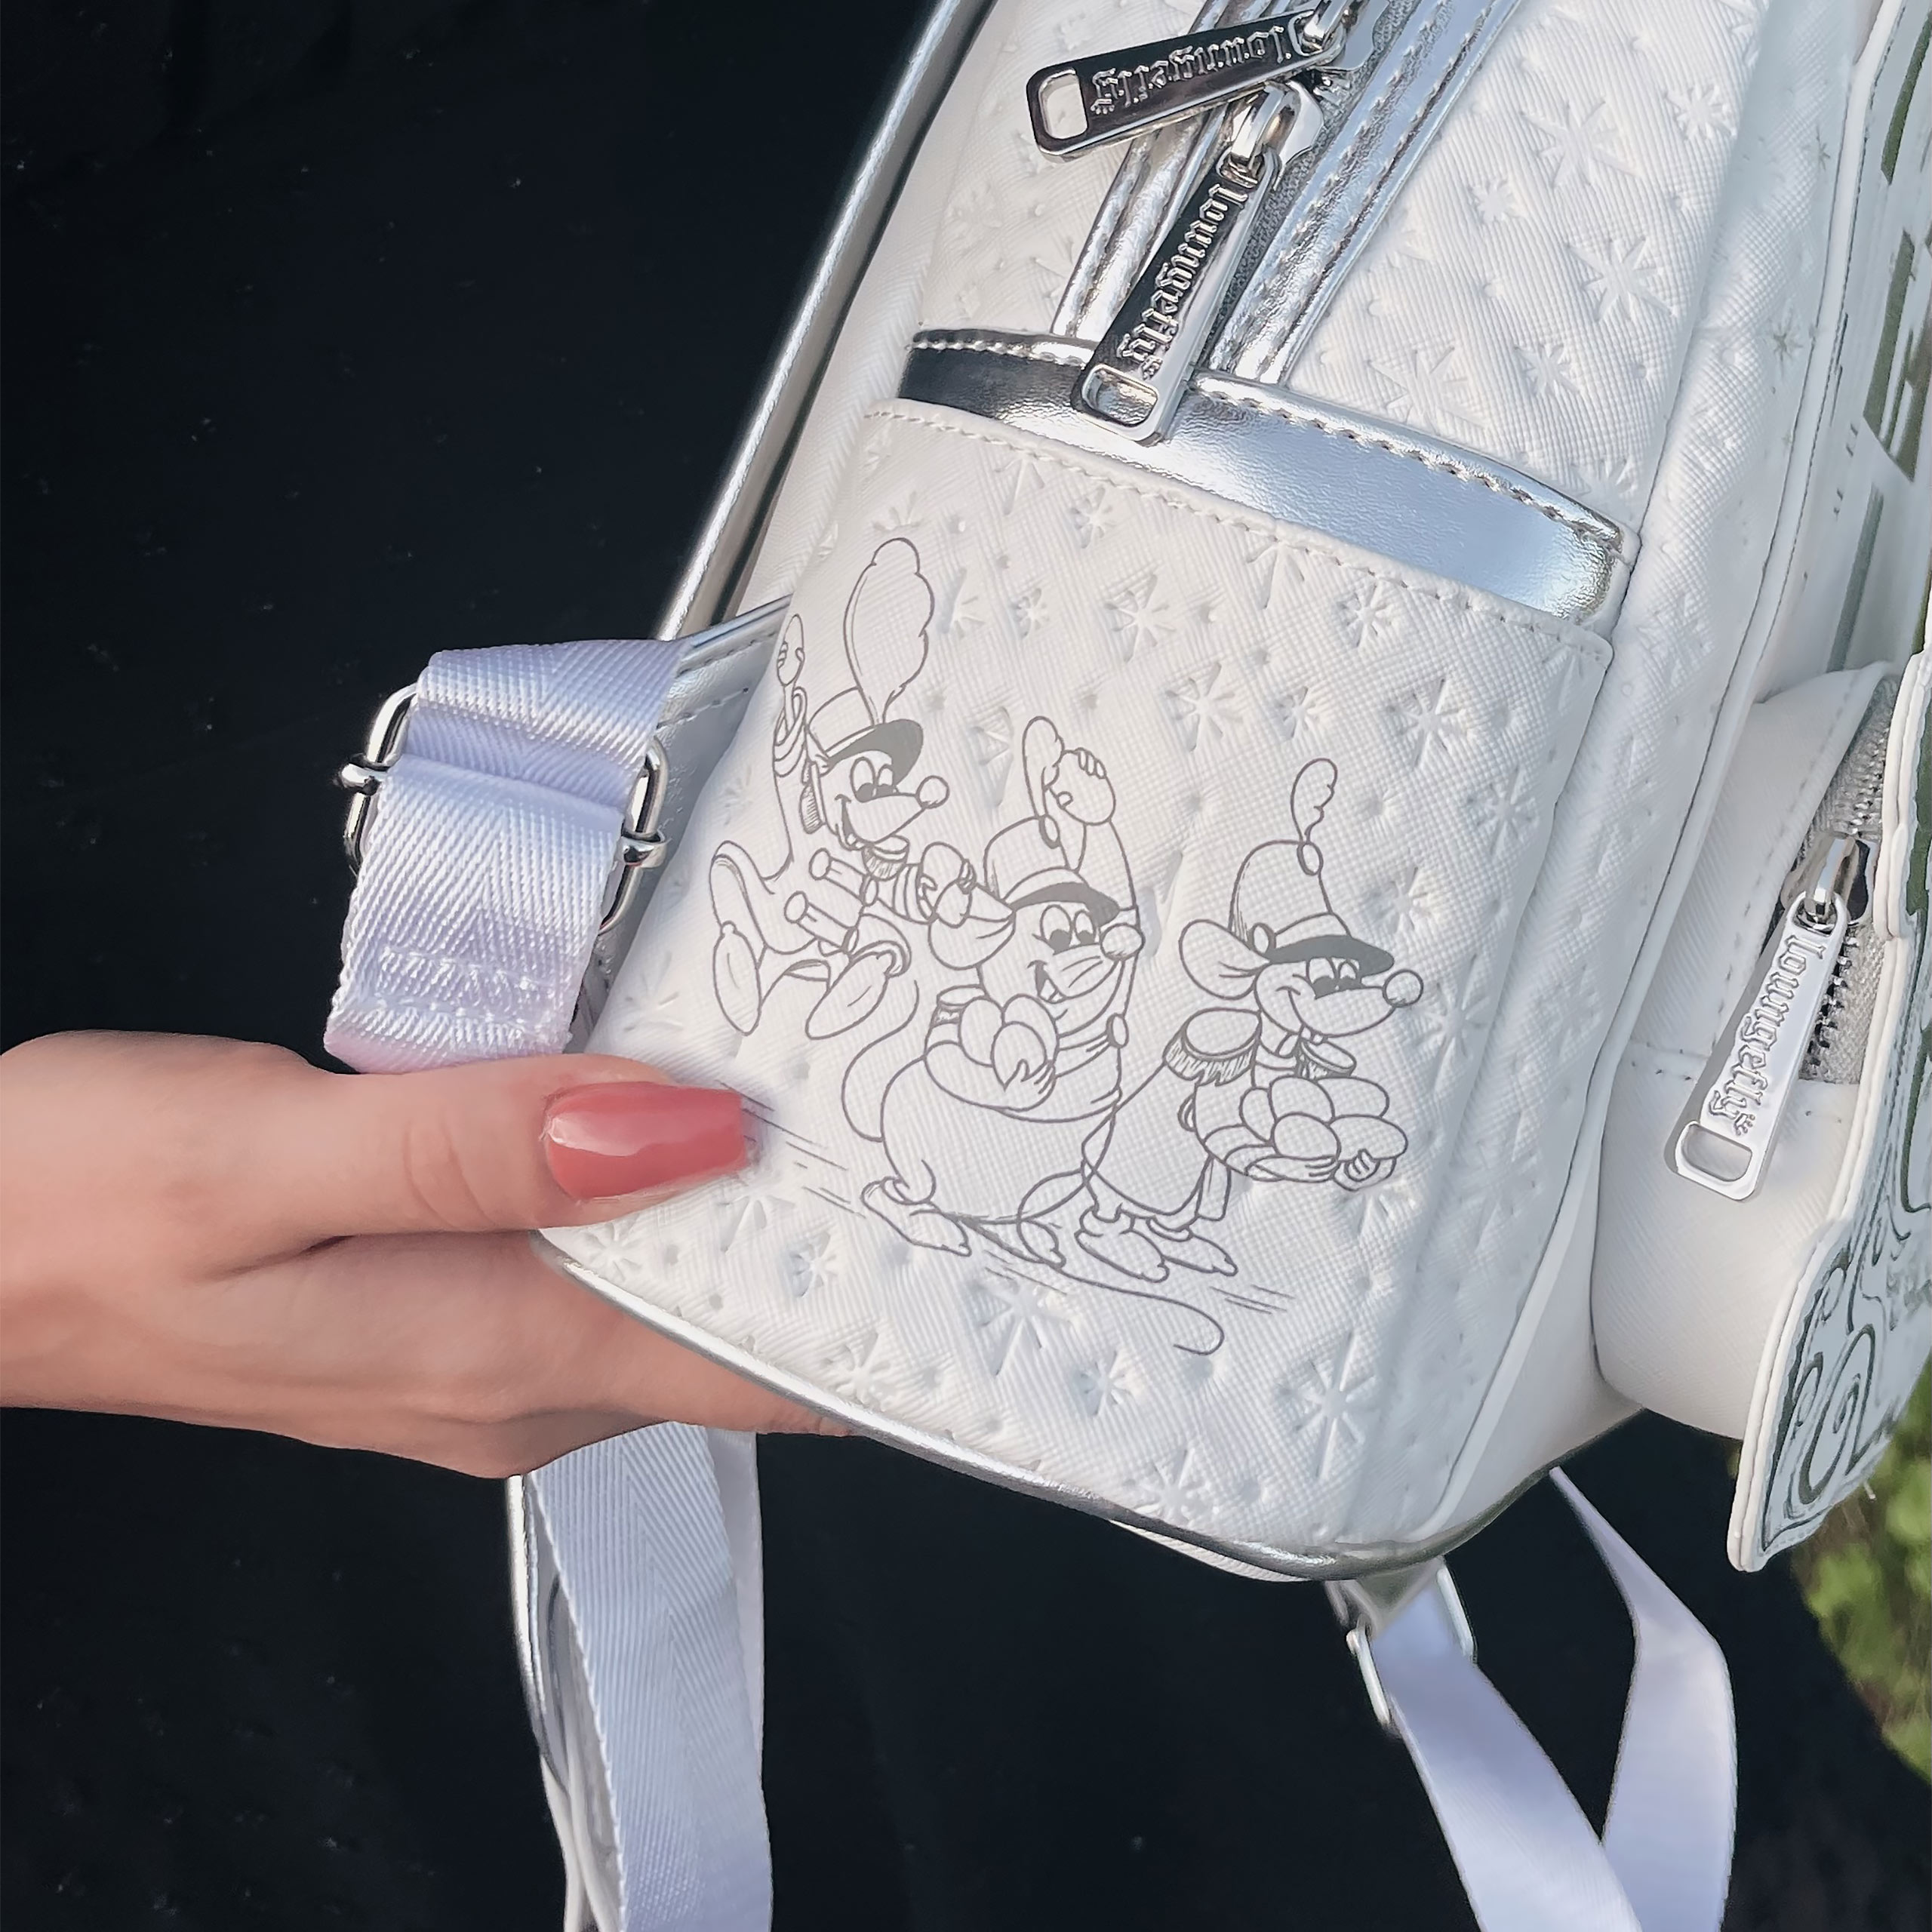 Cinderella - Happily Mini Backpack